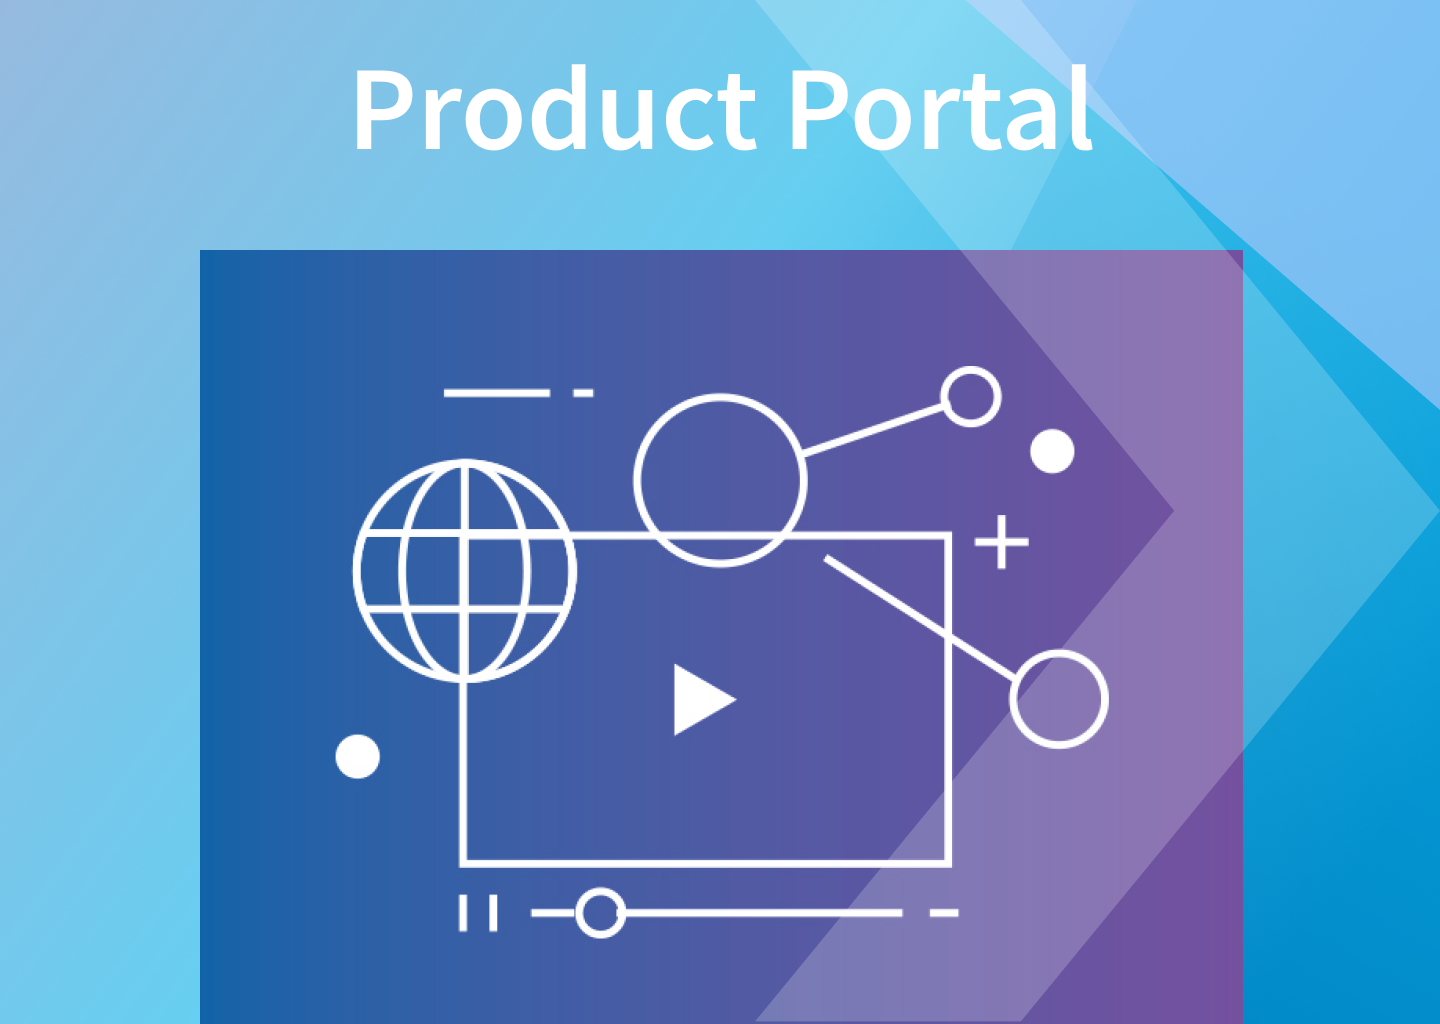 Product Portal